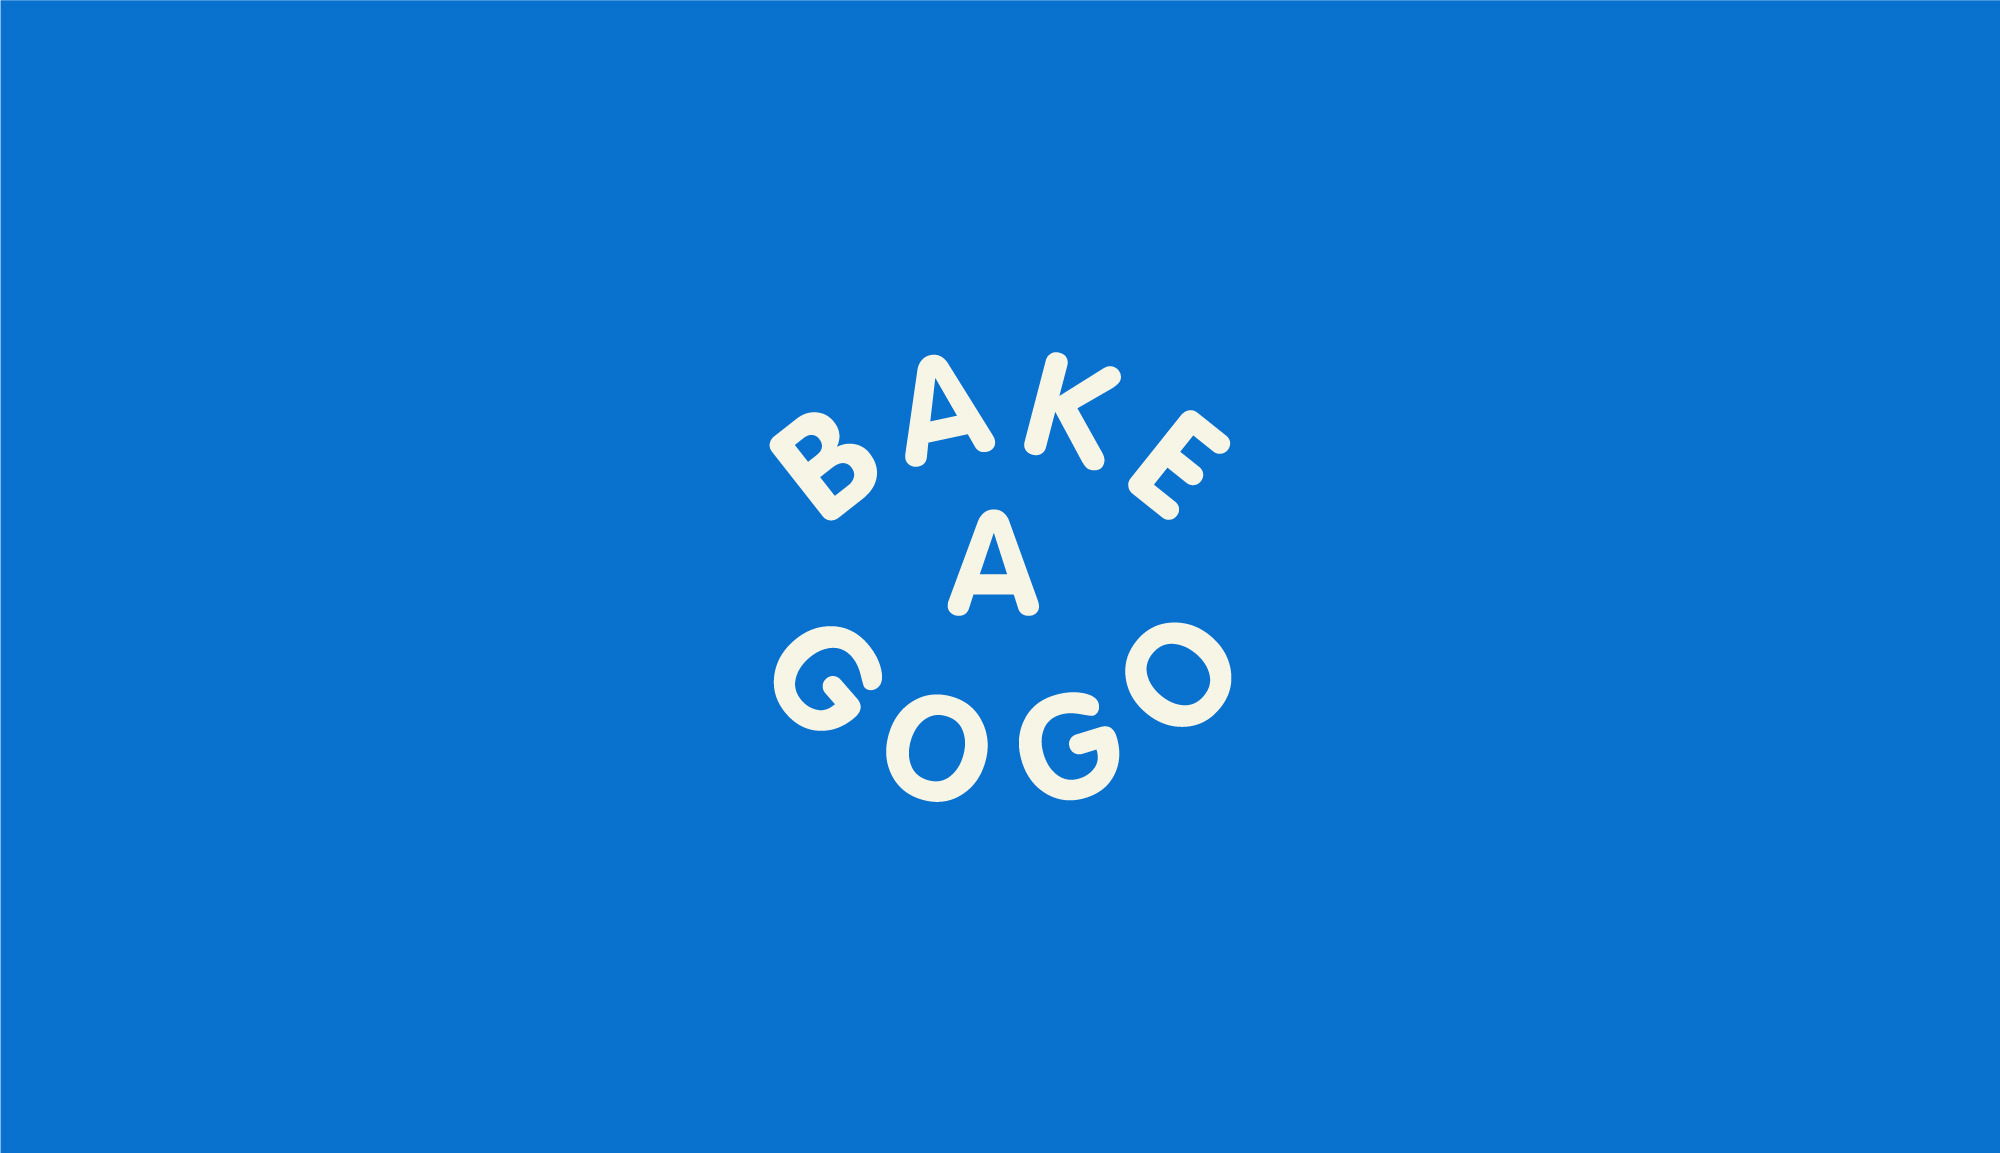 Bake A Gogo by The 1984 Jakarta